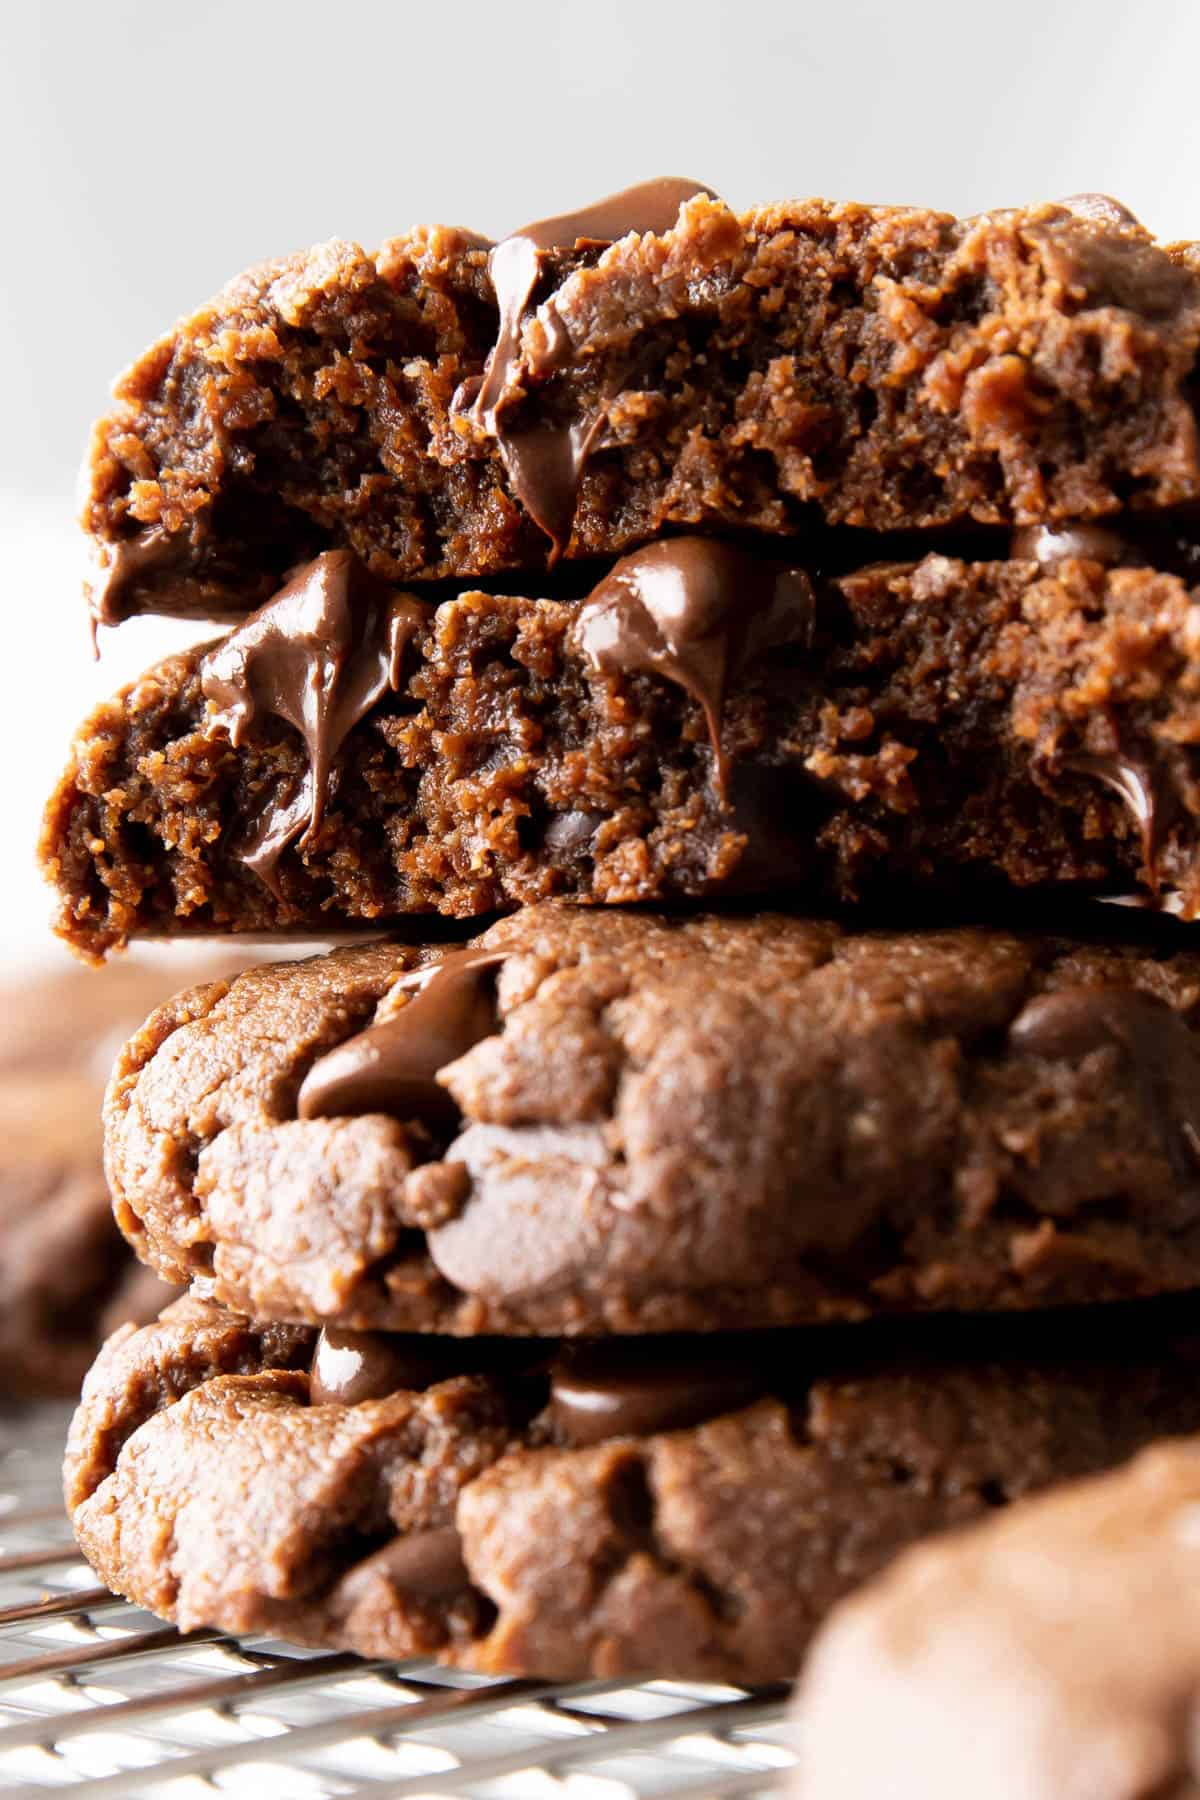 Very closeup photo of dark chocolate cookies to show texture